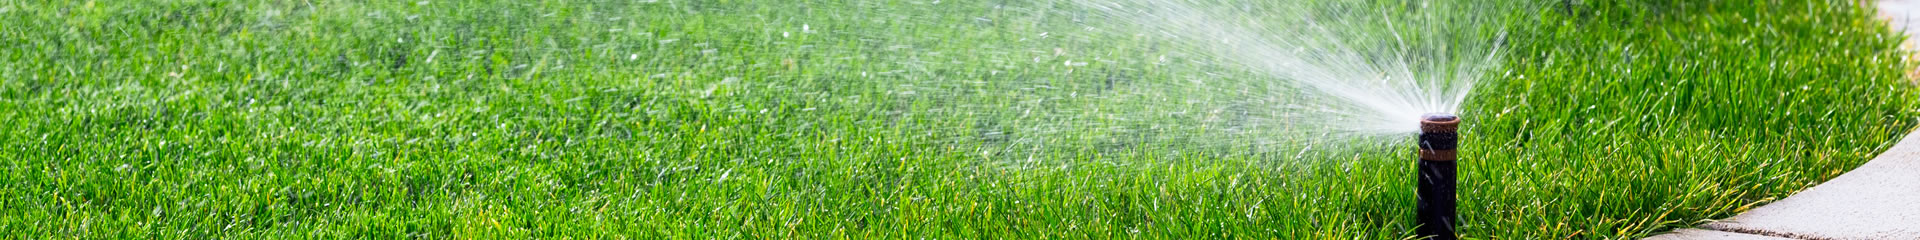 Sprinklers / Irrigation